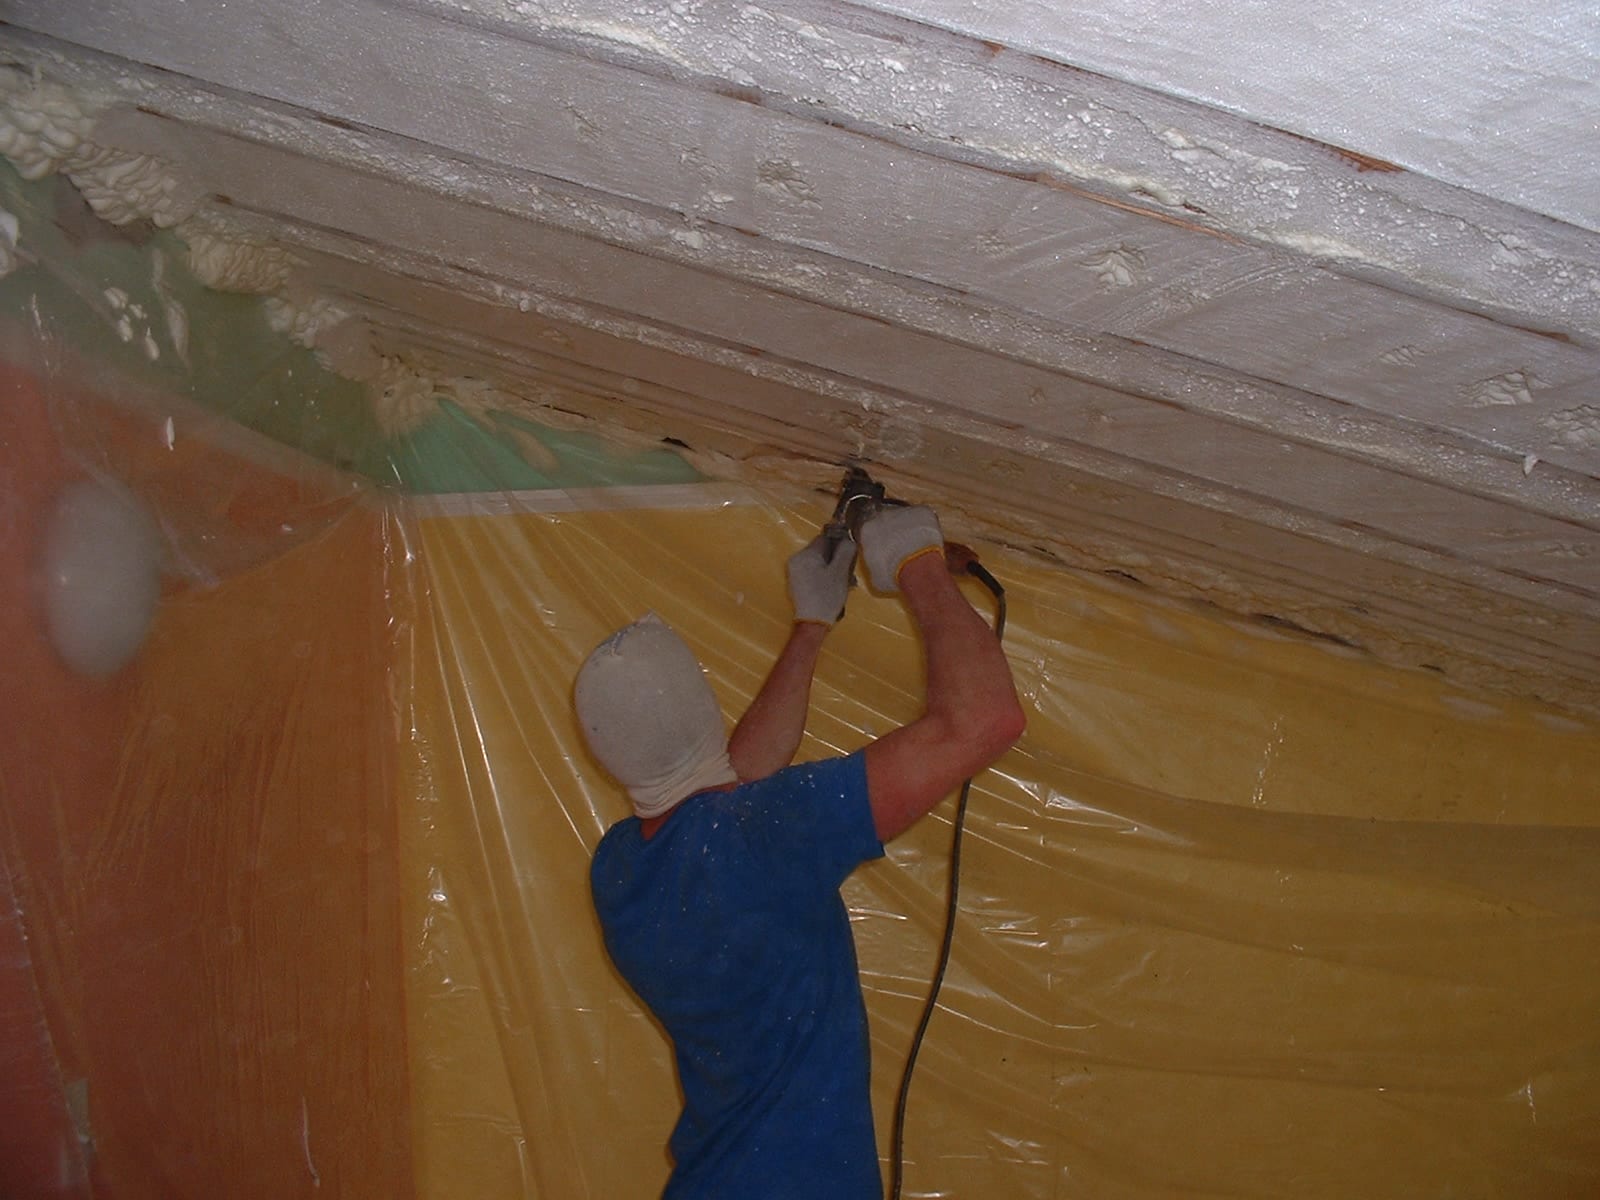 Open cell insulation foam is trimmed overhead.